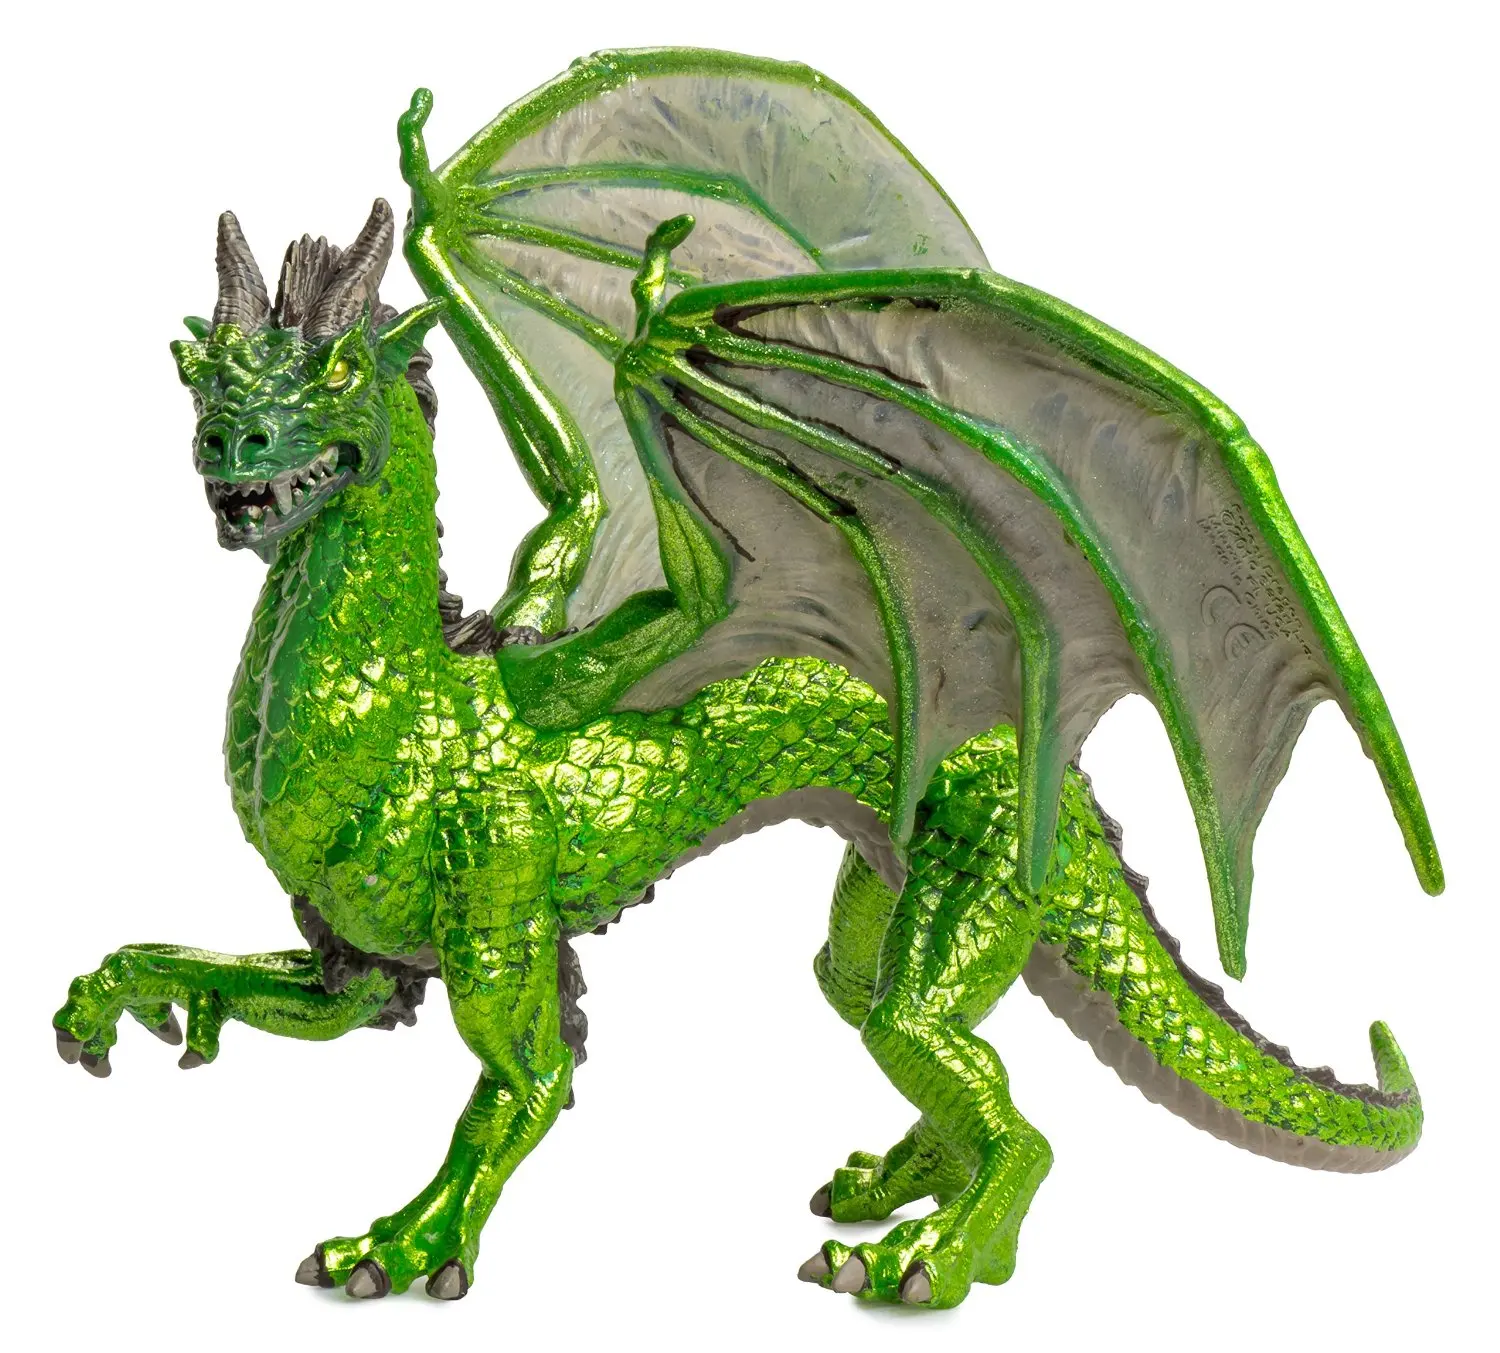 Wizard Dragon 2020 Safari Ltd Dragons Fantasy Figurine 100400 for sale online